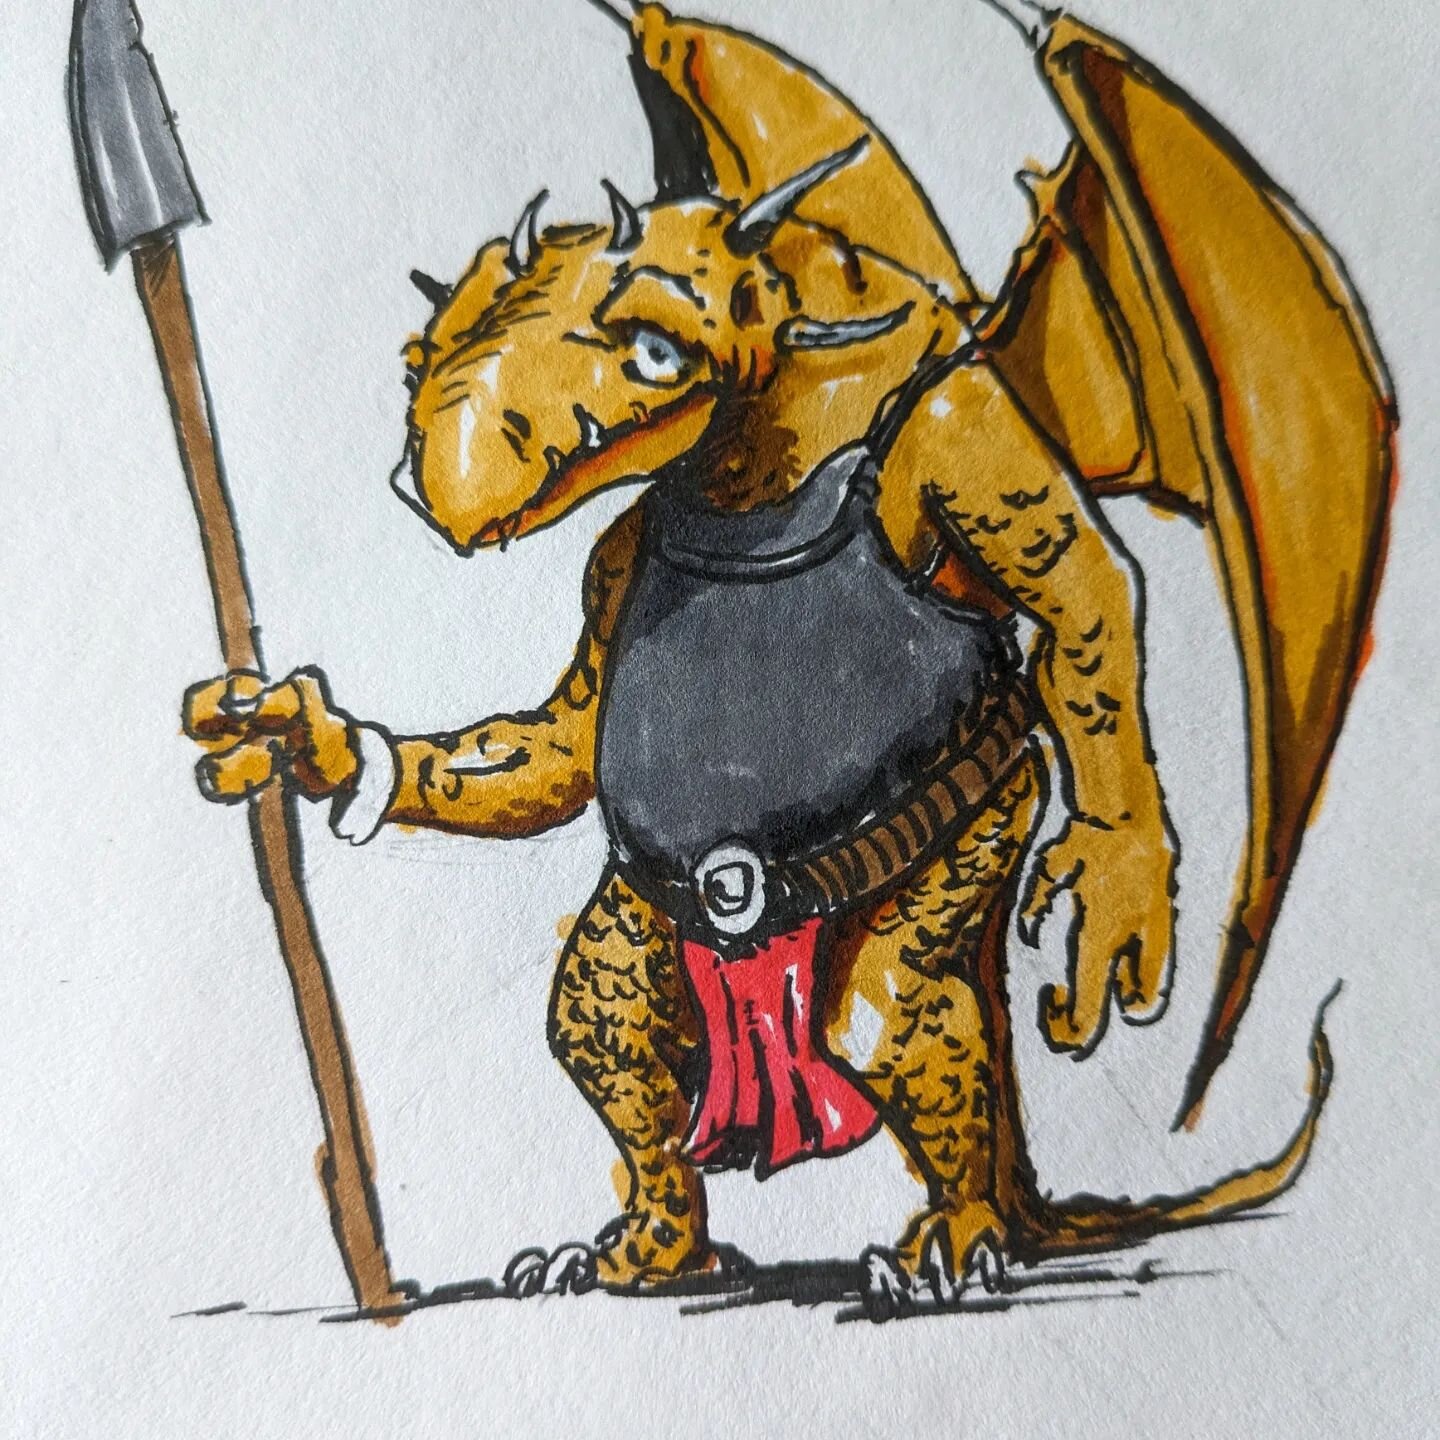 &quot;Imma fierce dwagon...&quot;
#dragonborn #dnd #dungeonsanddragons #characterdrawing #sketchbook